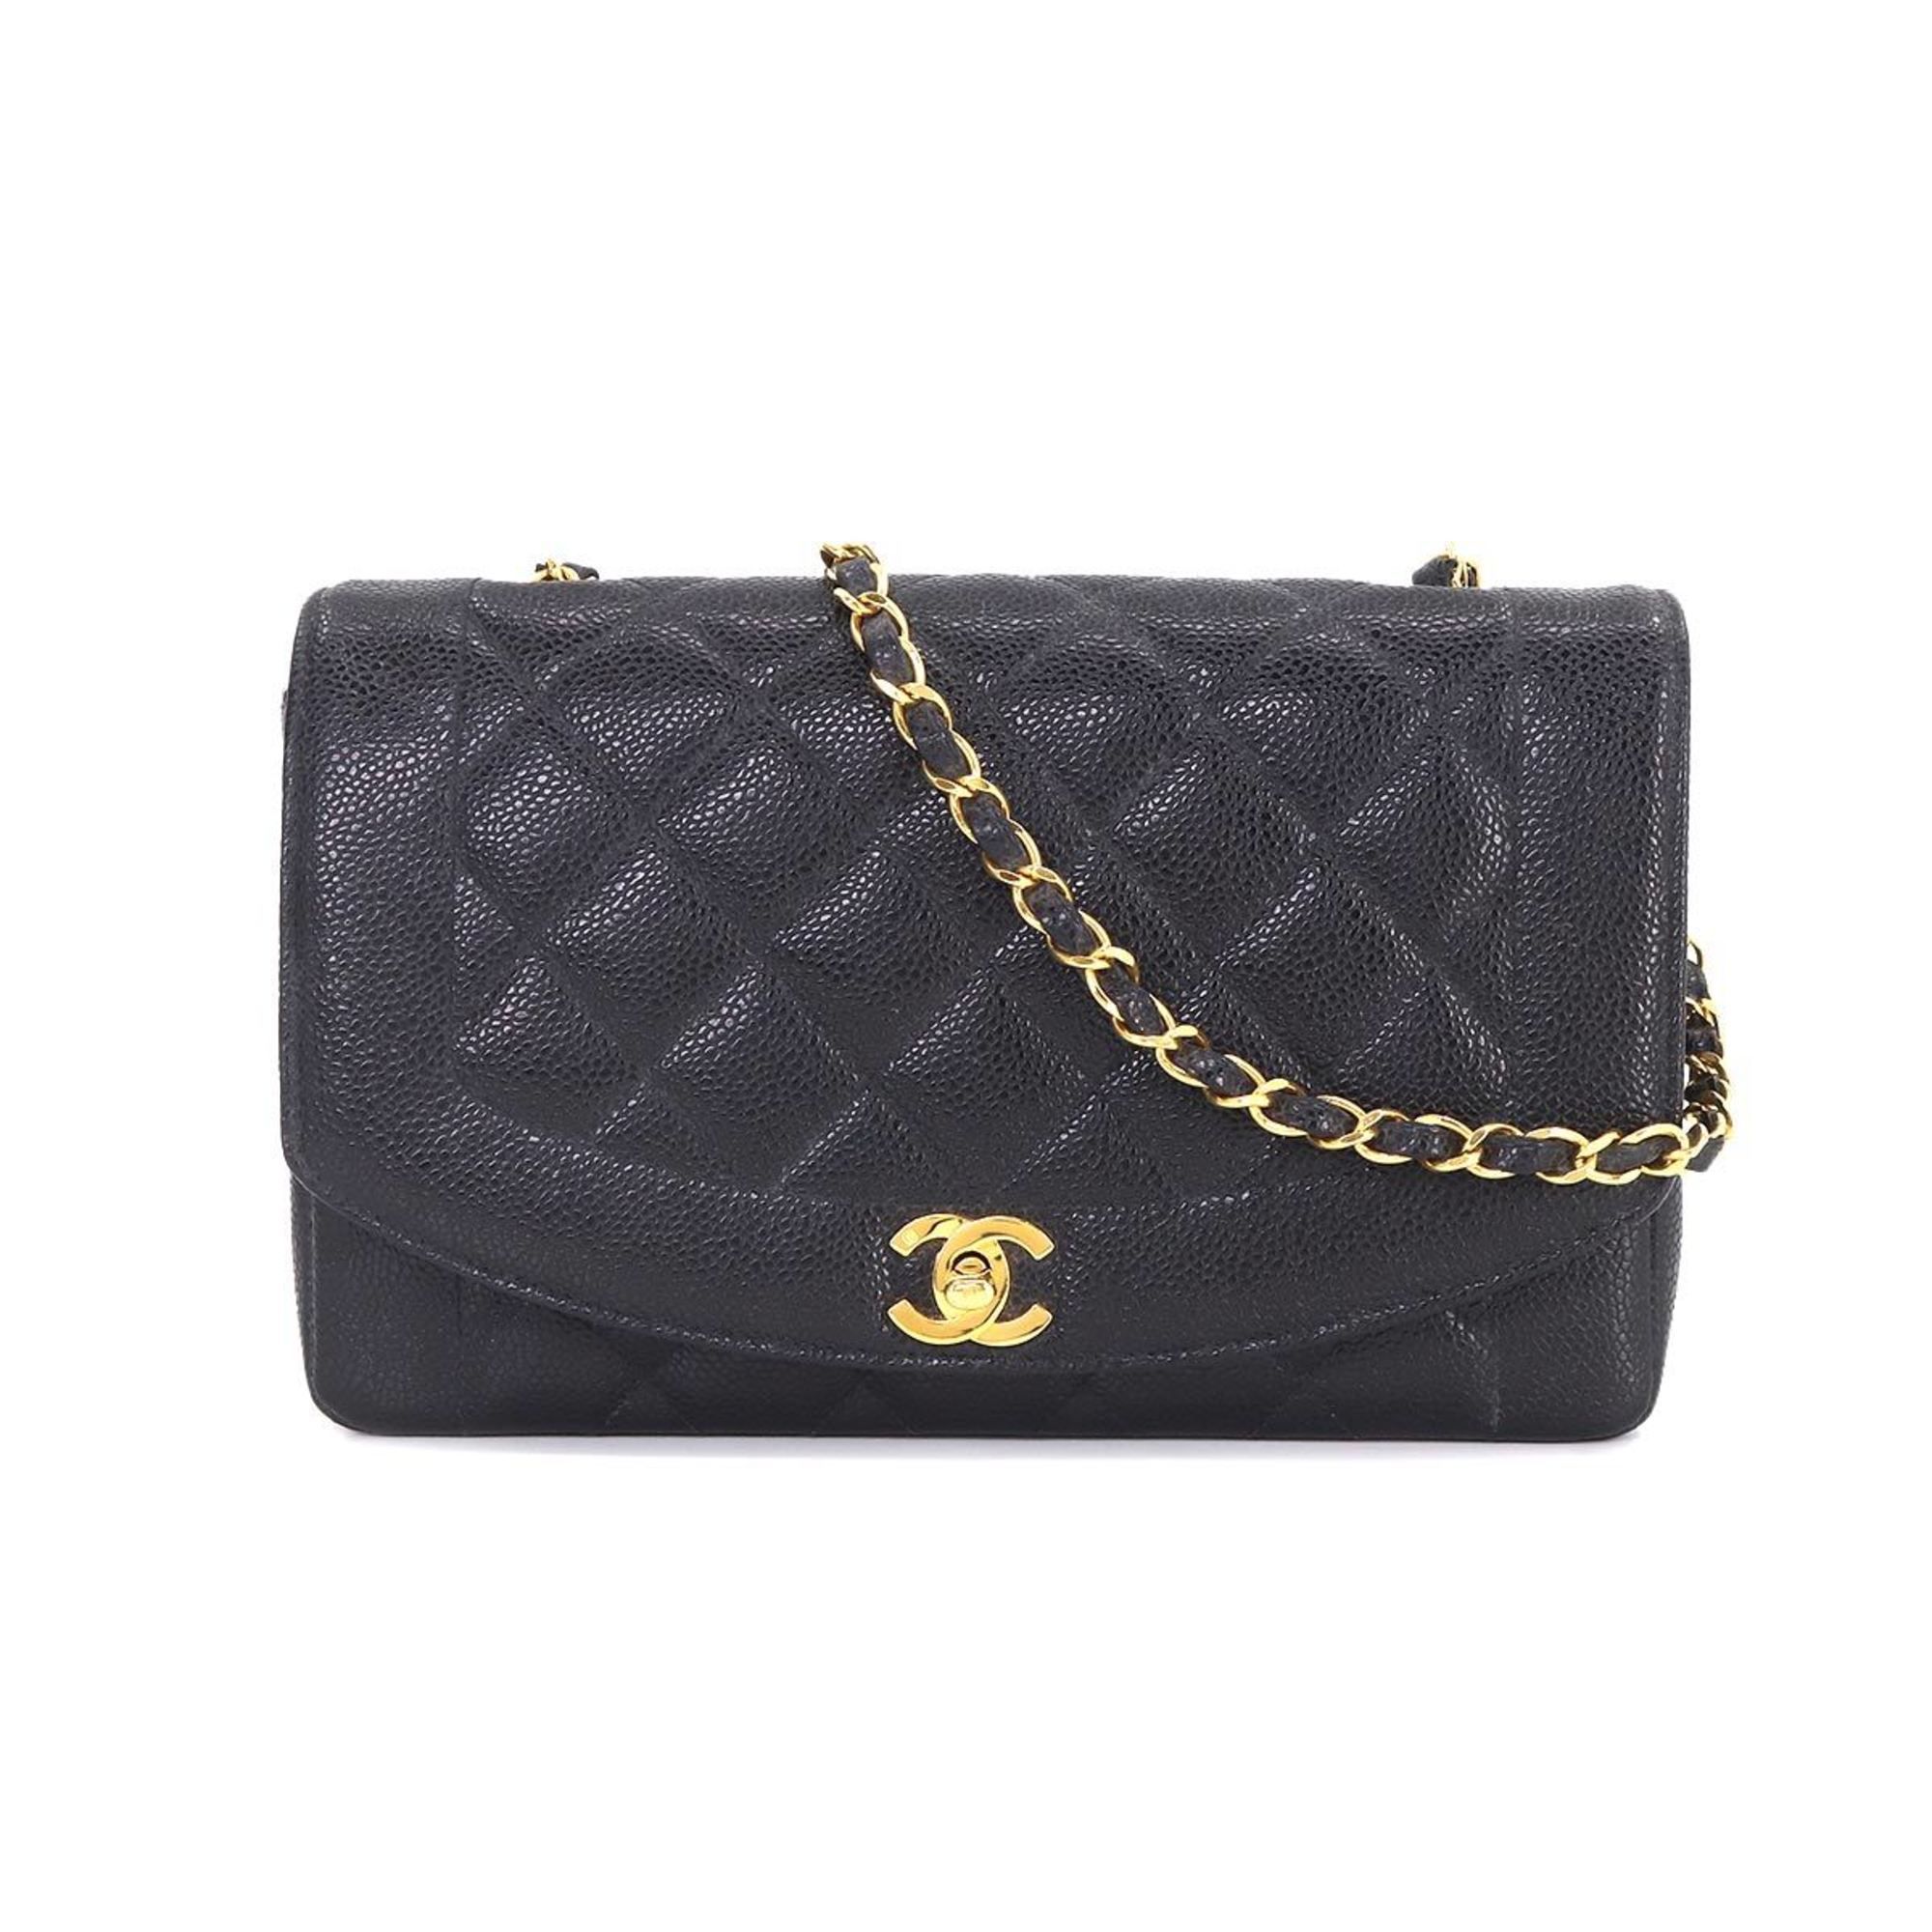 Chanel CHANEL Diana Matelasse 25 Chain Shoulder Bag Caviar Skin